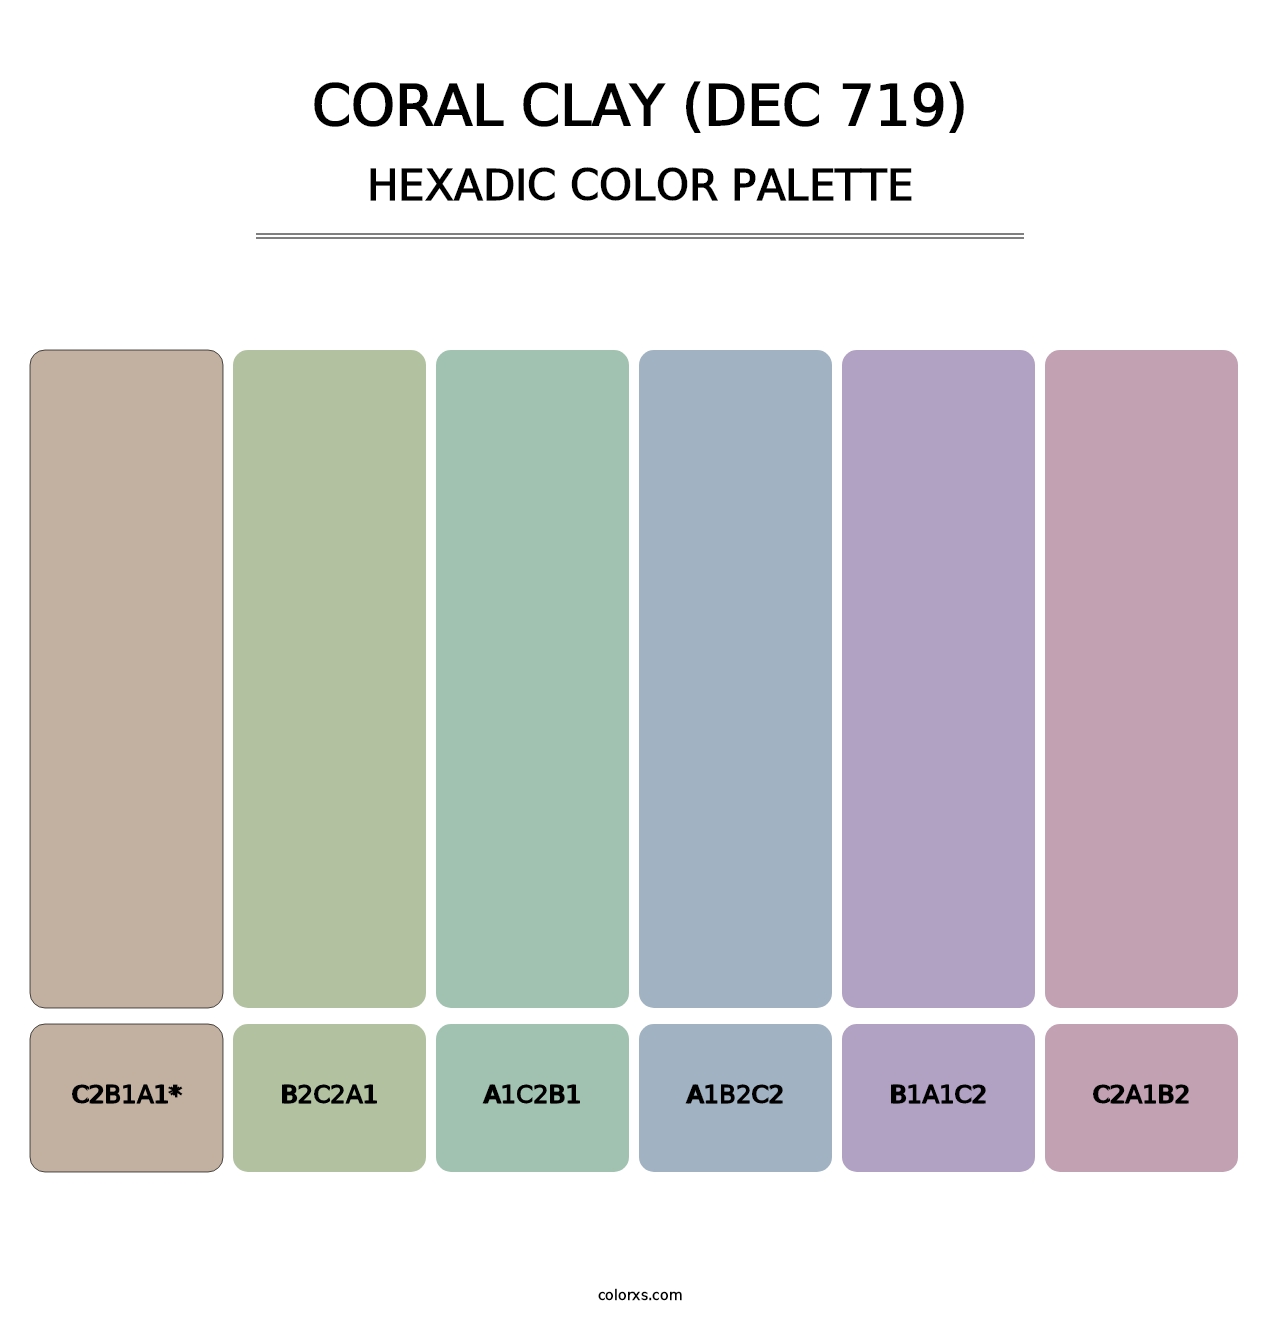 Coral Clay (DEC 719) - Hexadic Color Palette